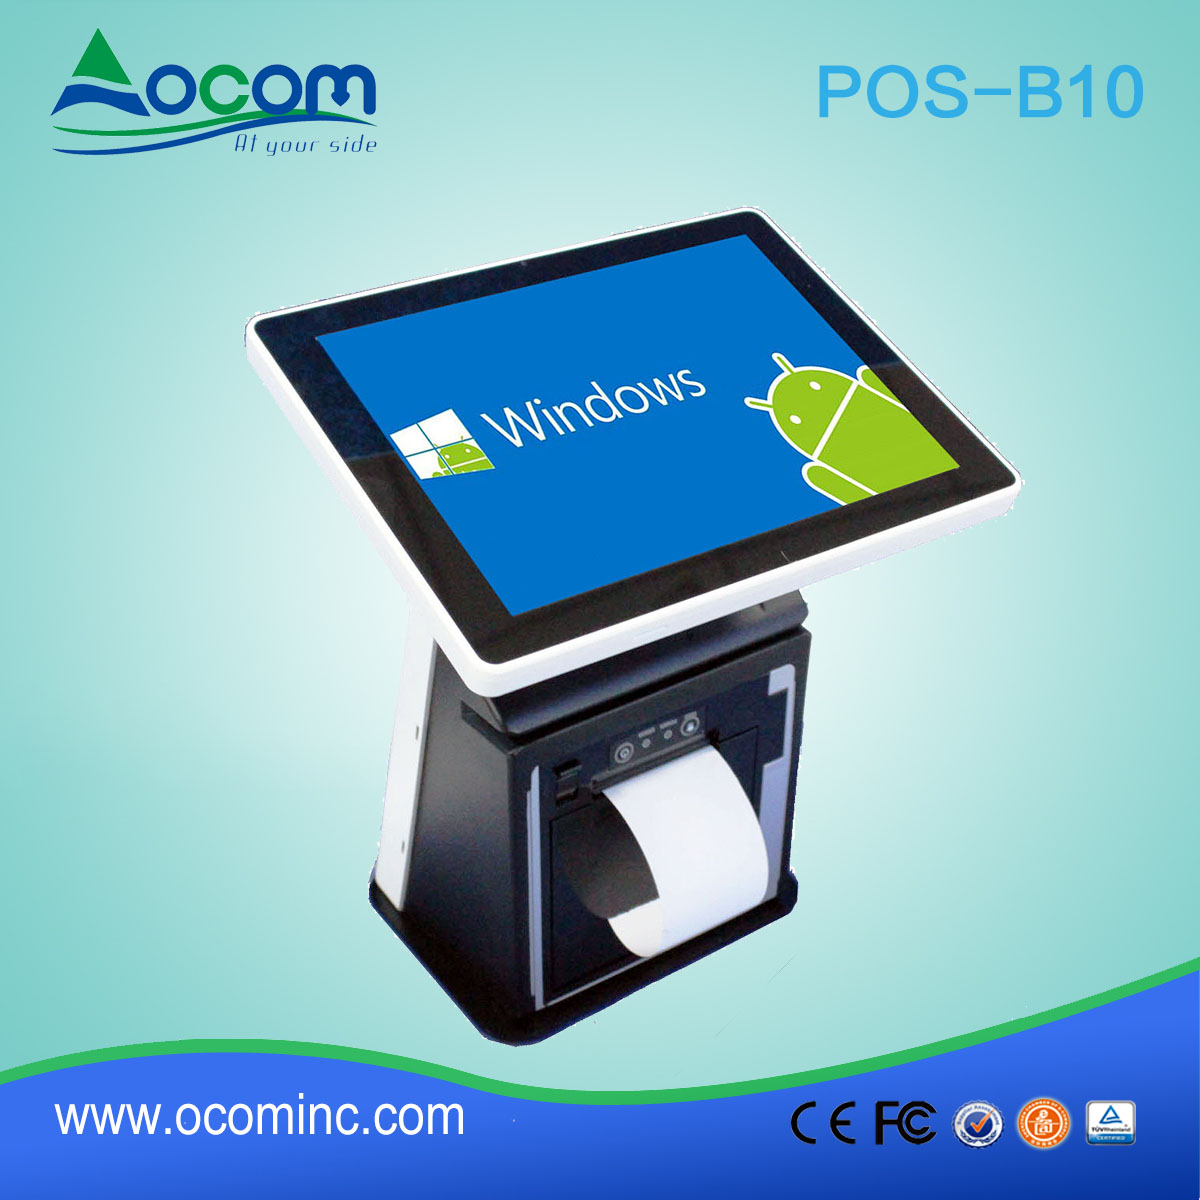 10 "Touch Screen POS-System alle in einem mit Thermal Printer